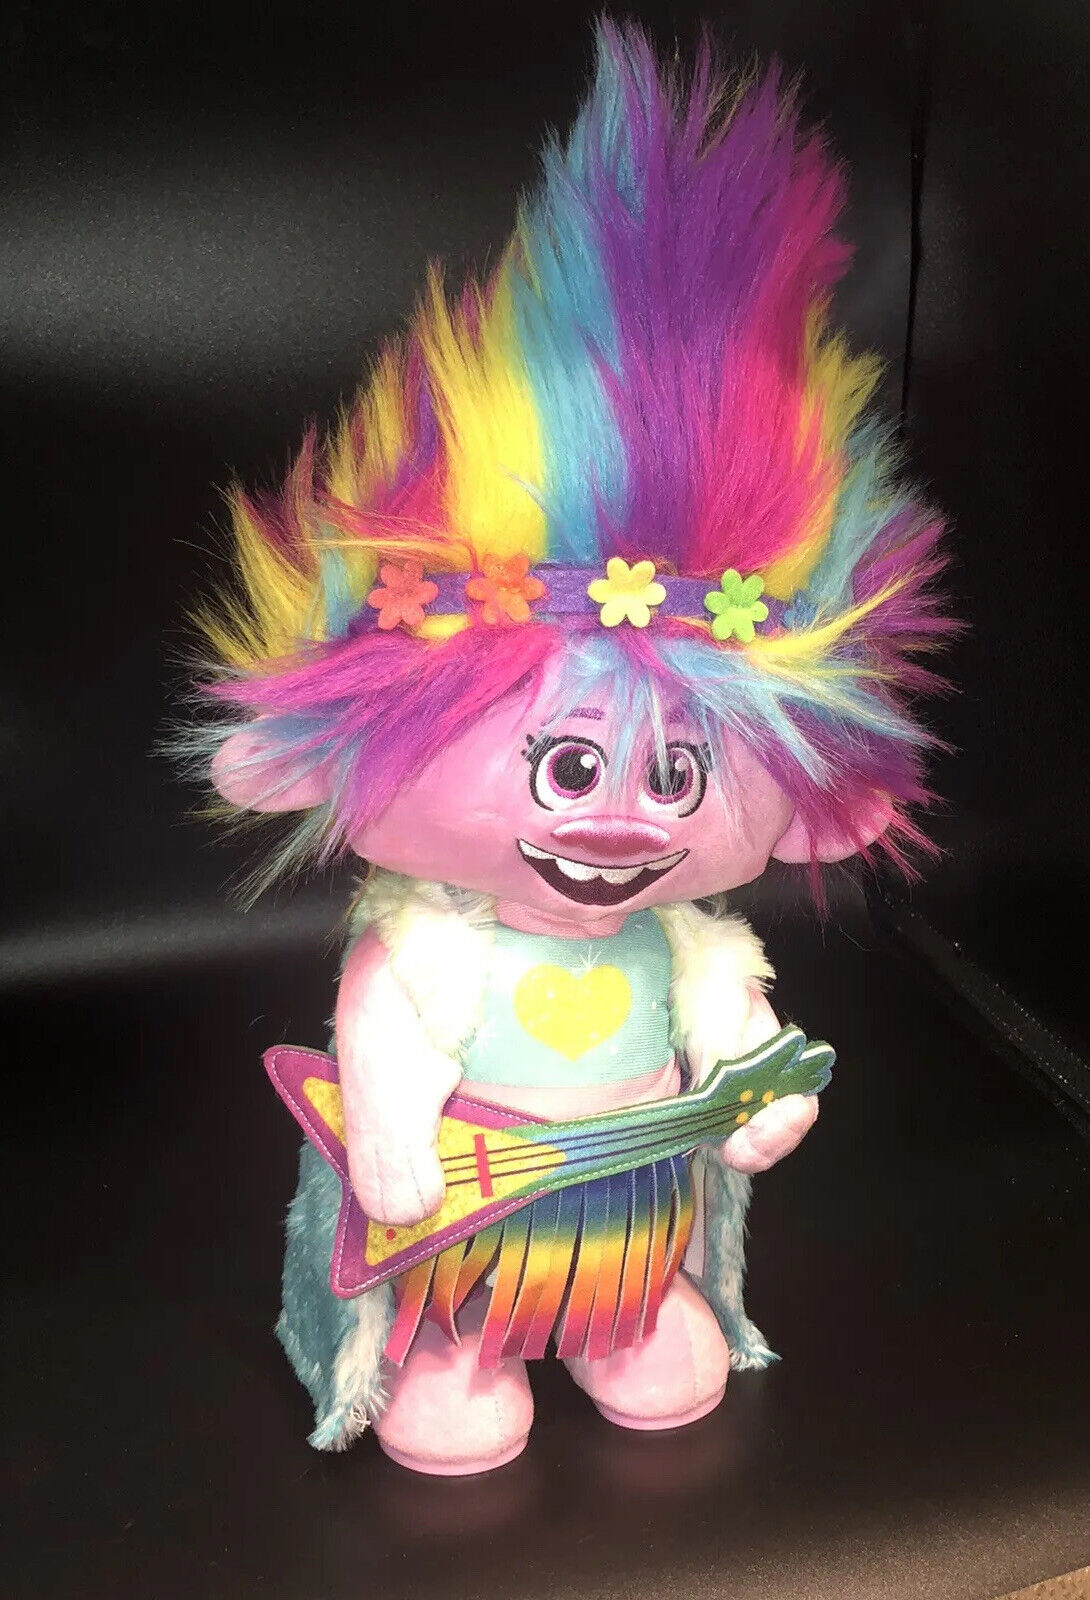 Trolls World Tour Dancing Singing Animate Plush Doll Trolls Wanna Have